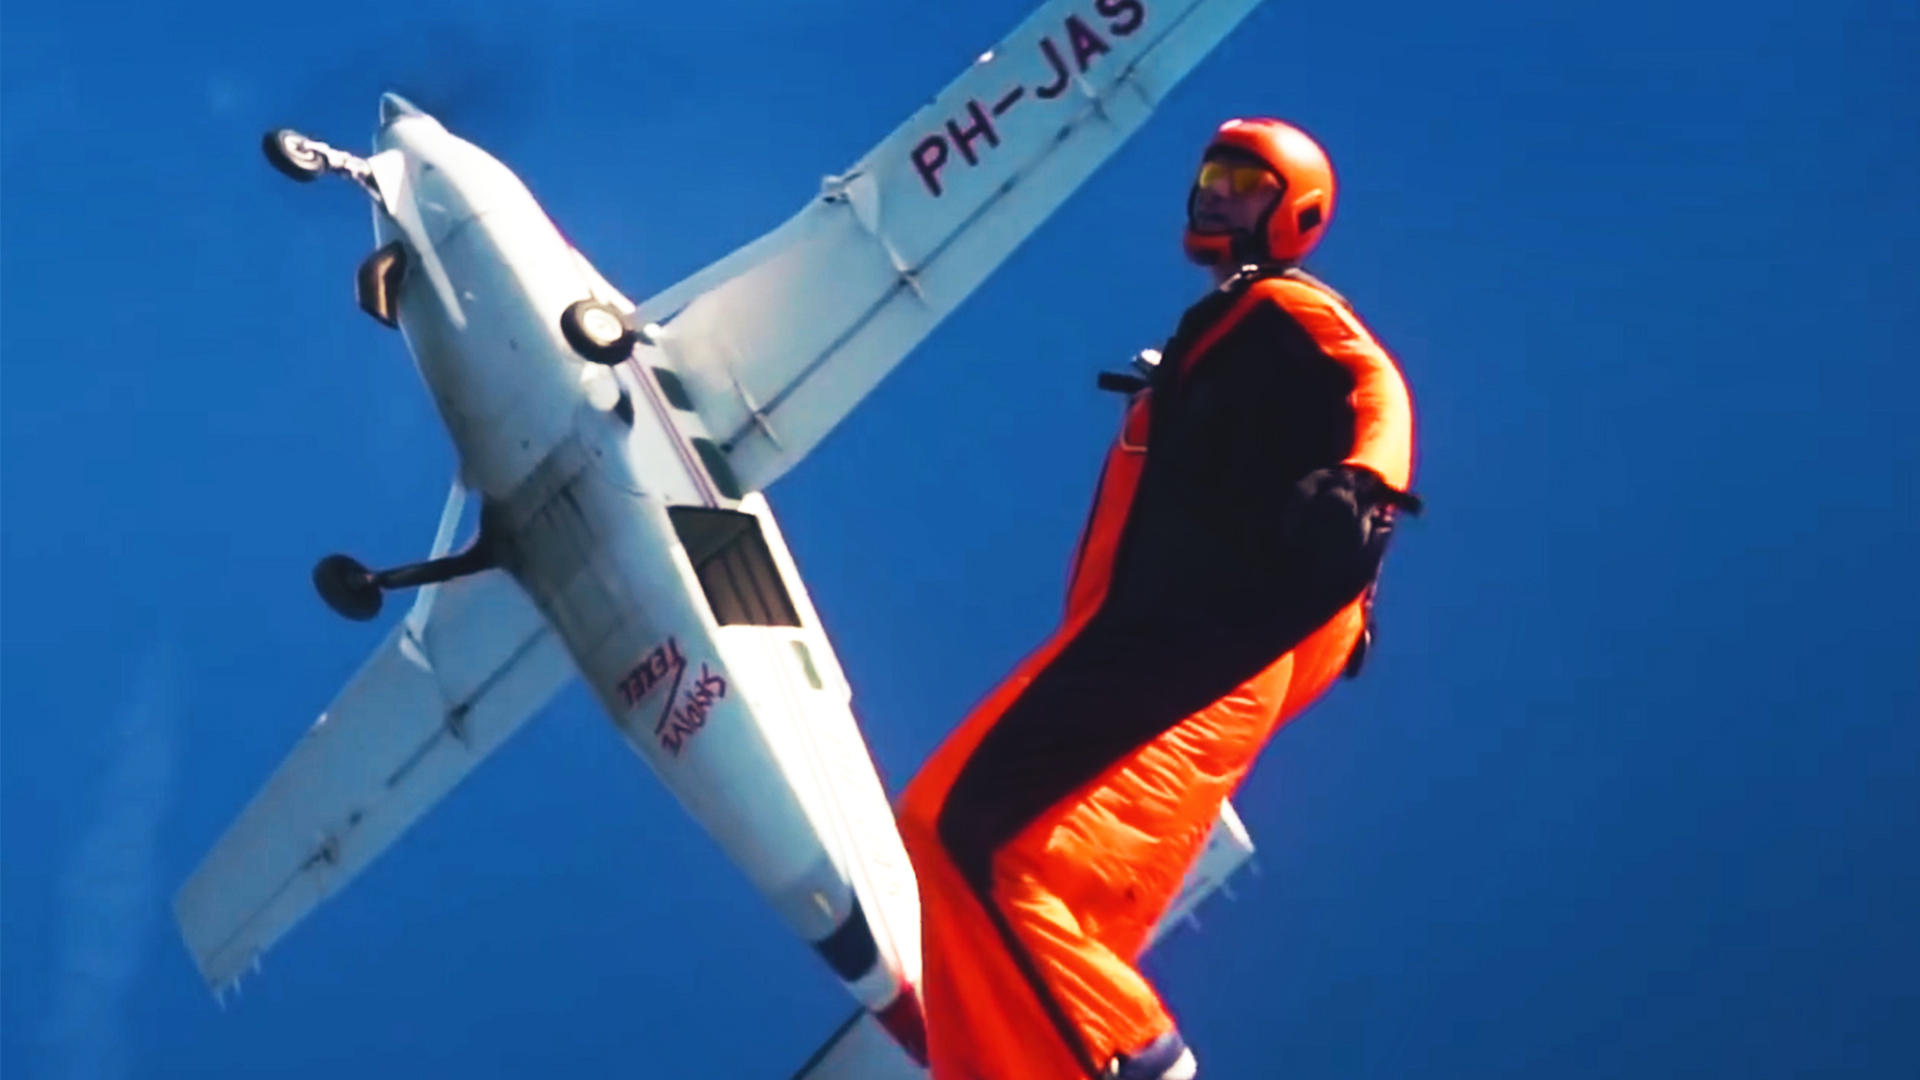 wingsuit act